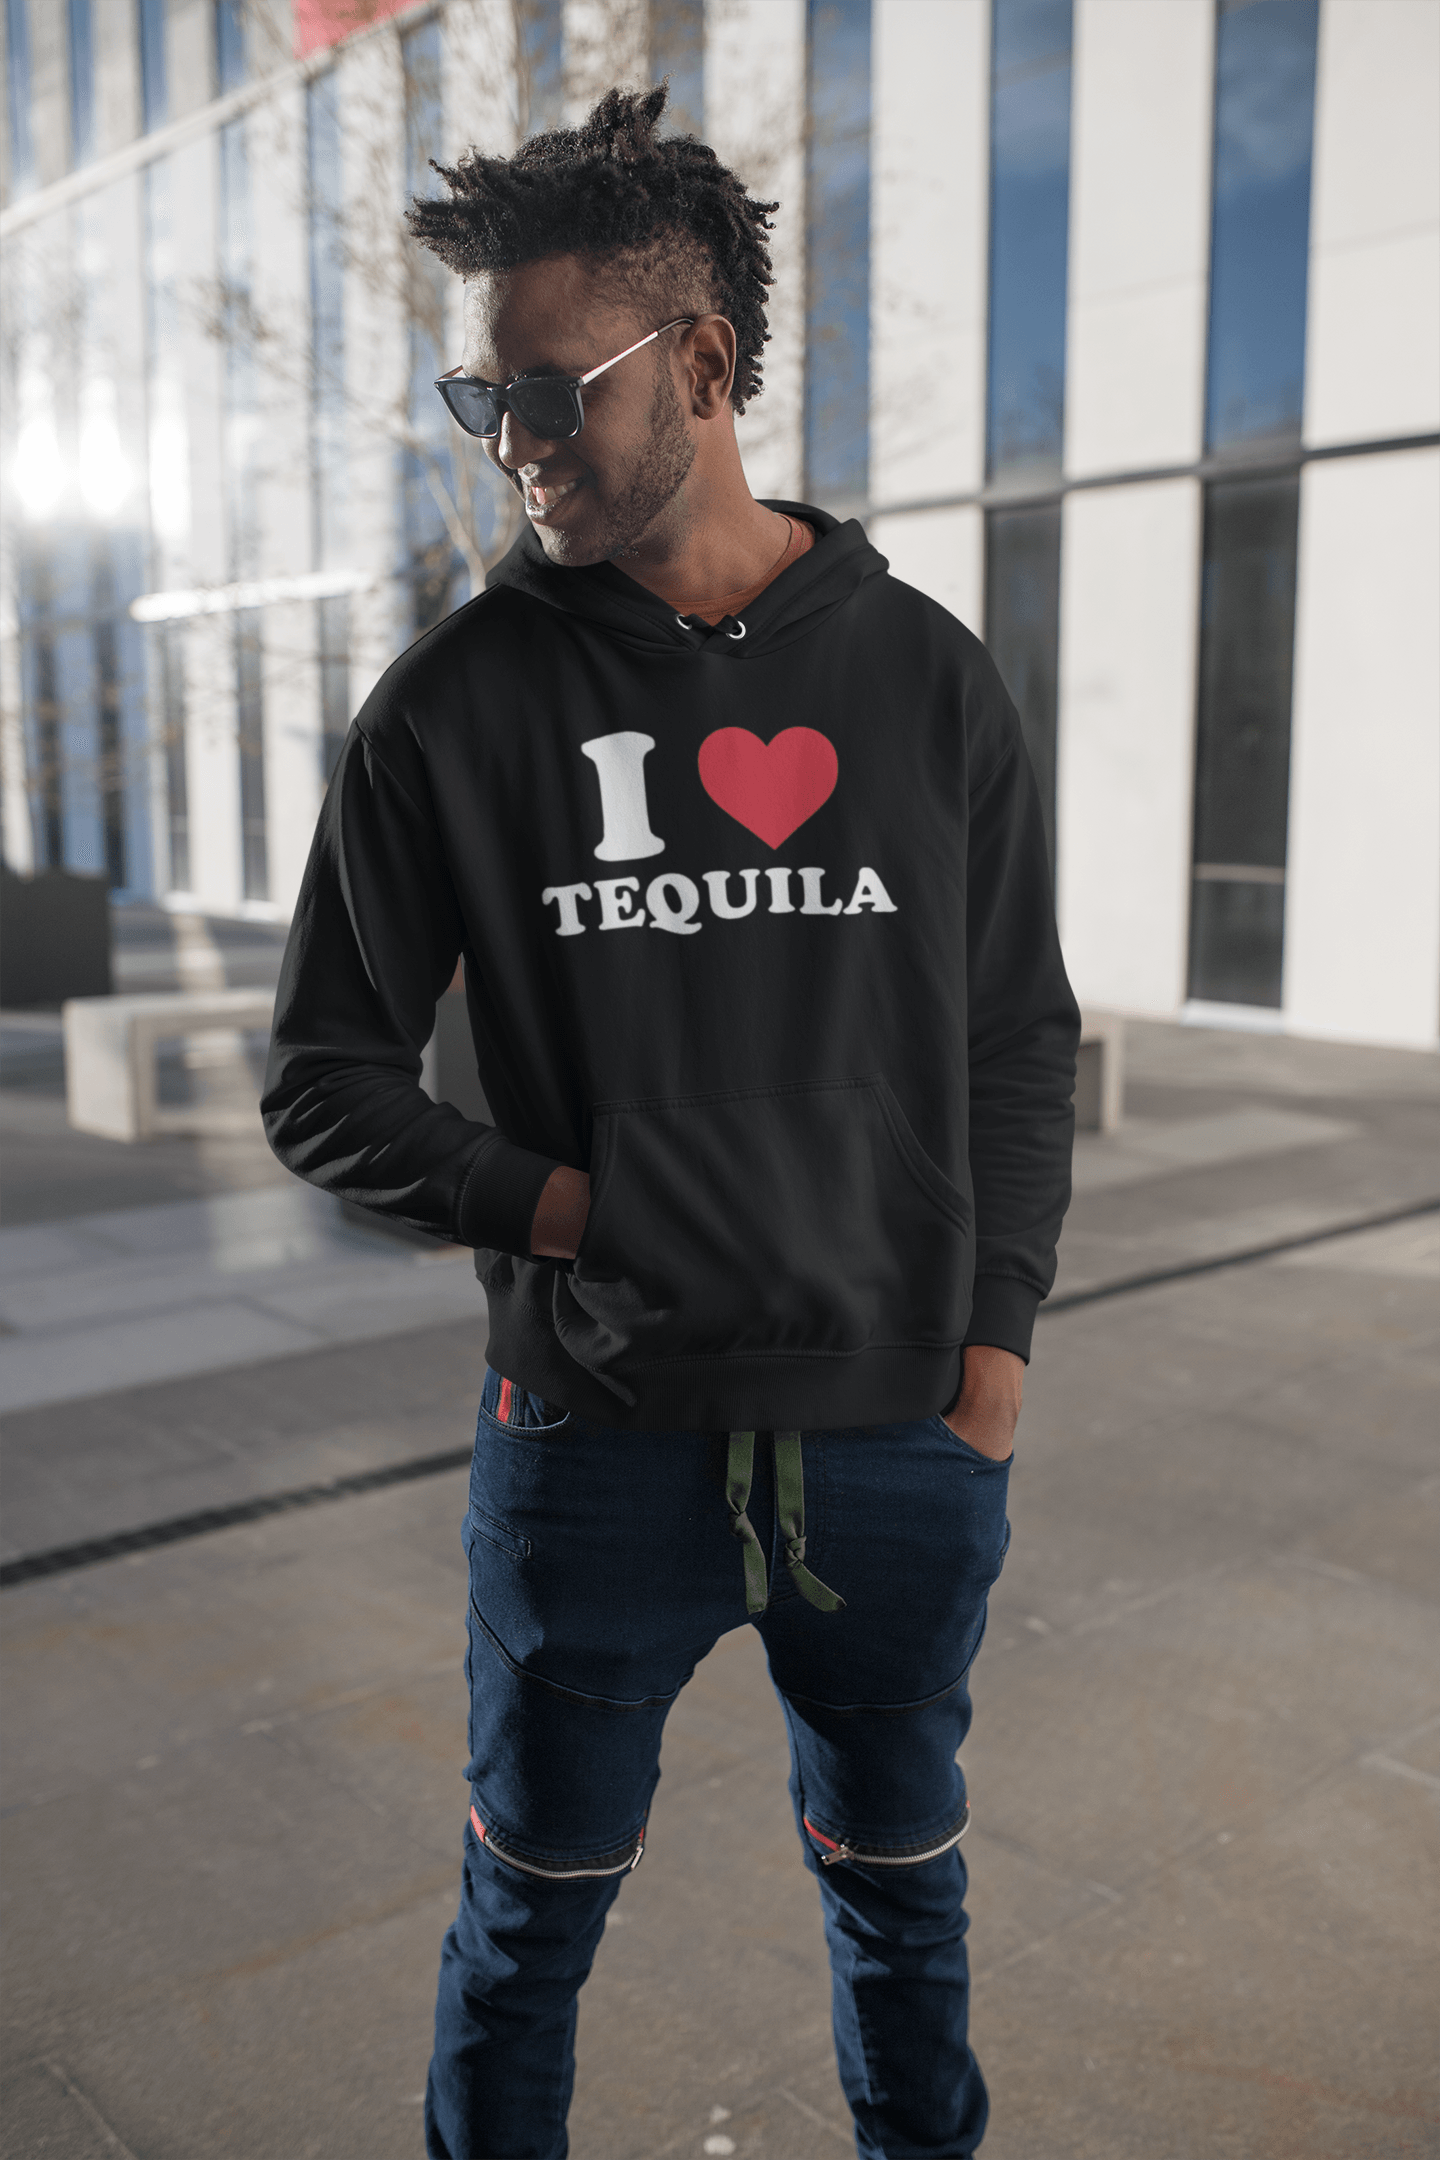 I Love Tequila Hoodie Soft Style Blended Cotton Top Koala Pullover - TopKoalaTee